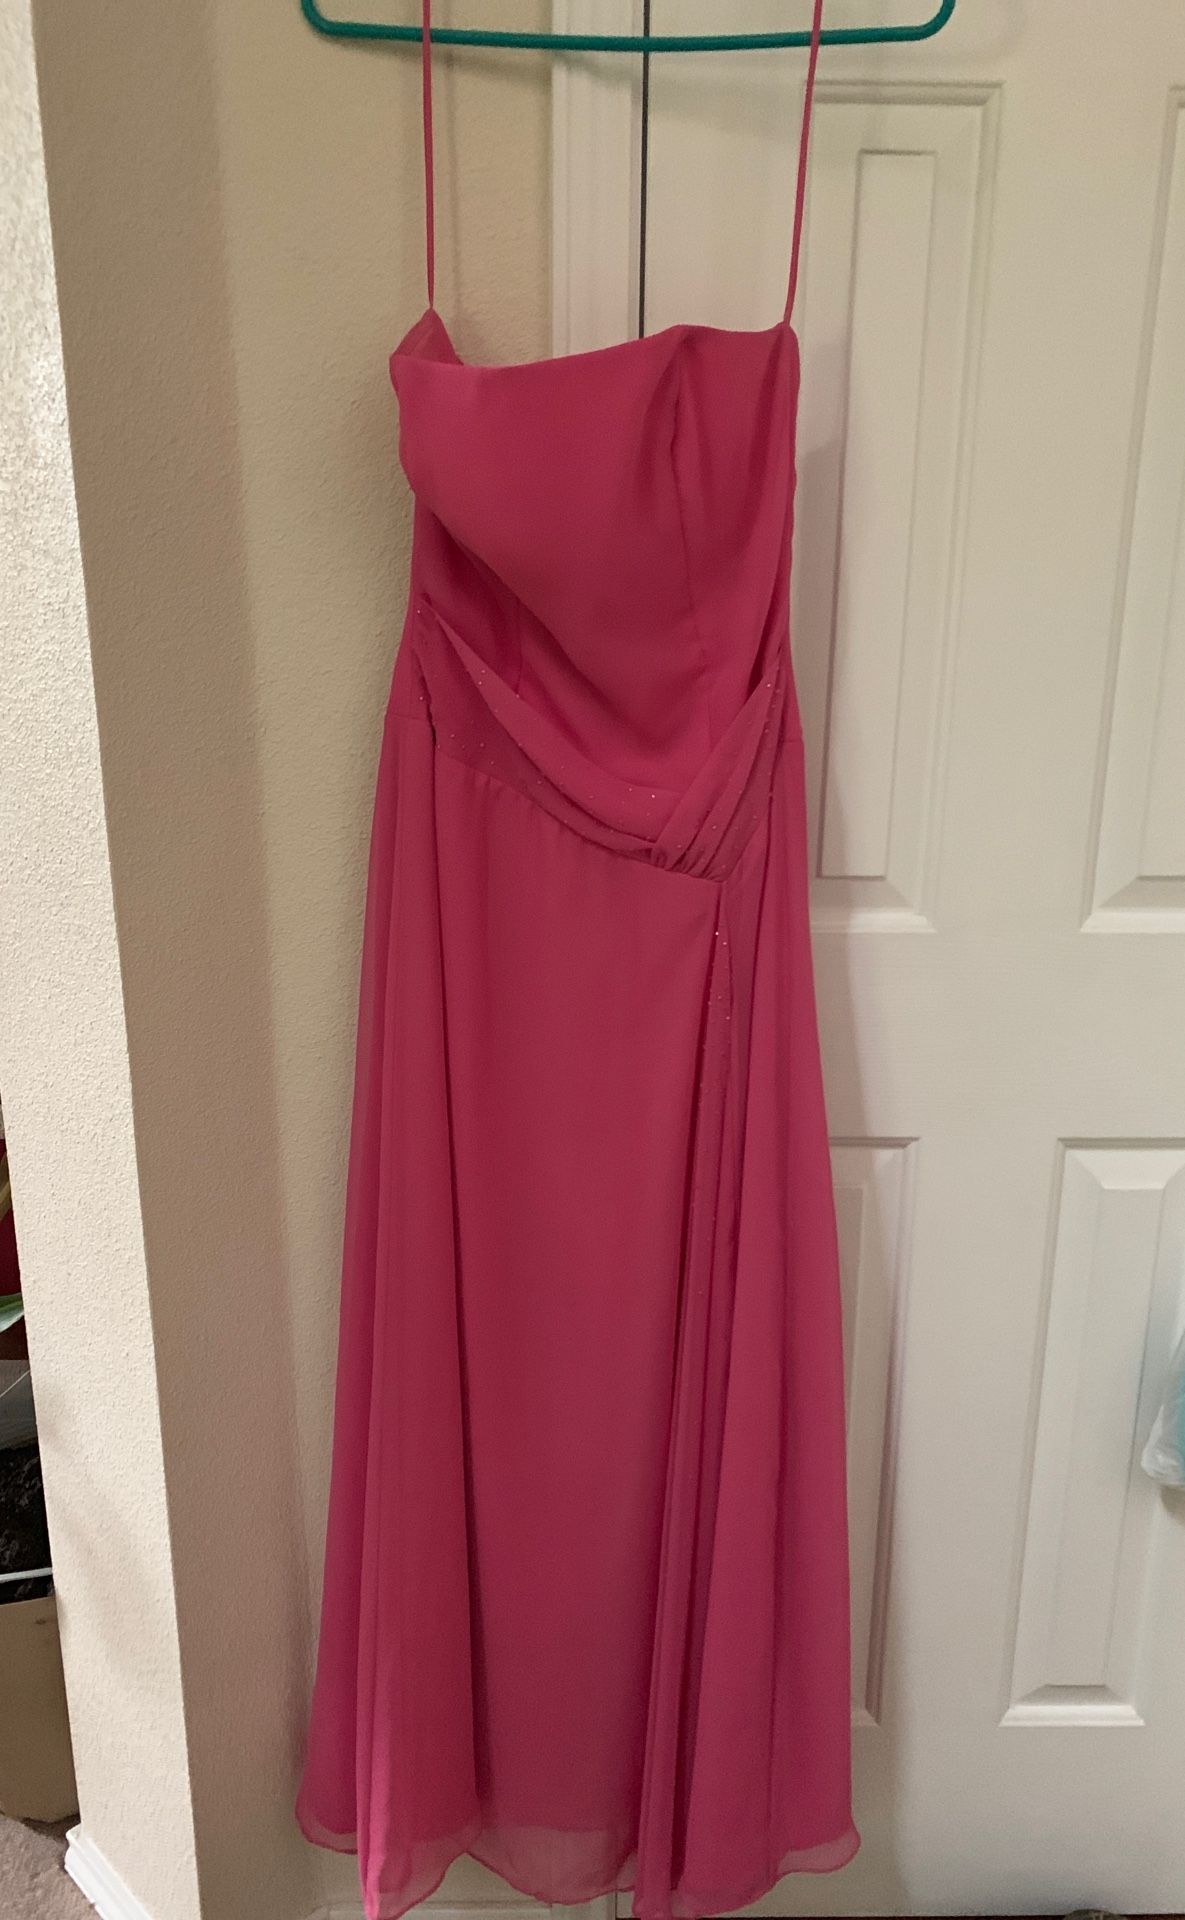 Pink formal dress size 2